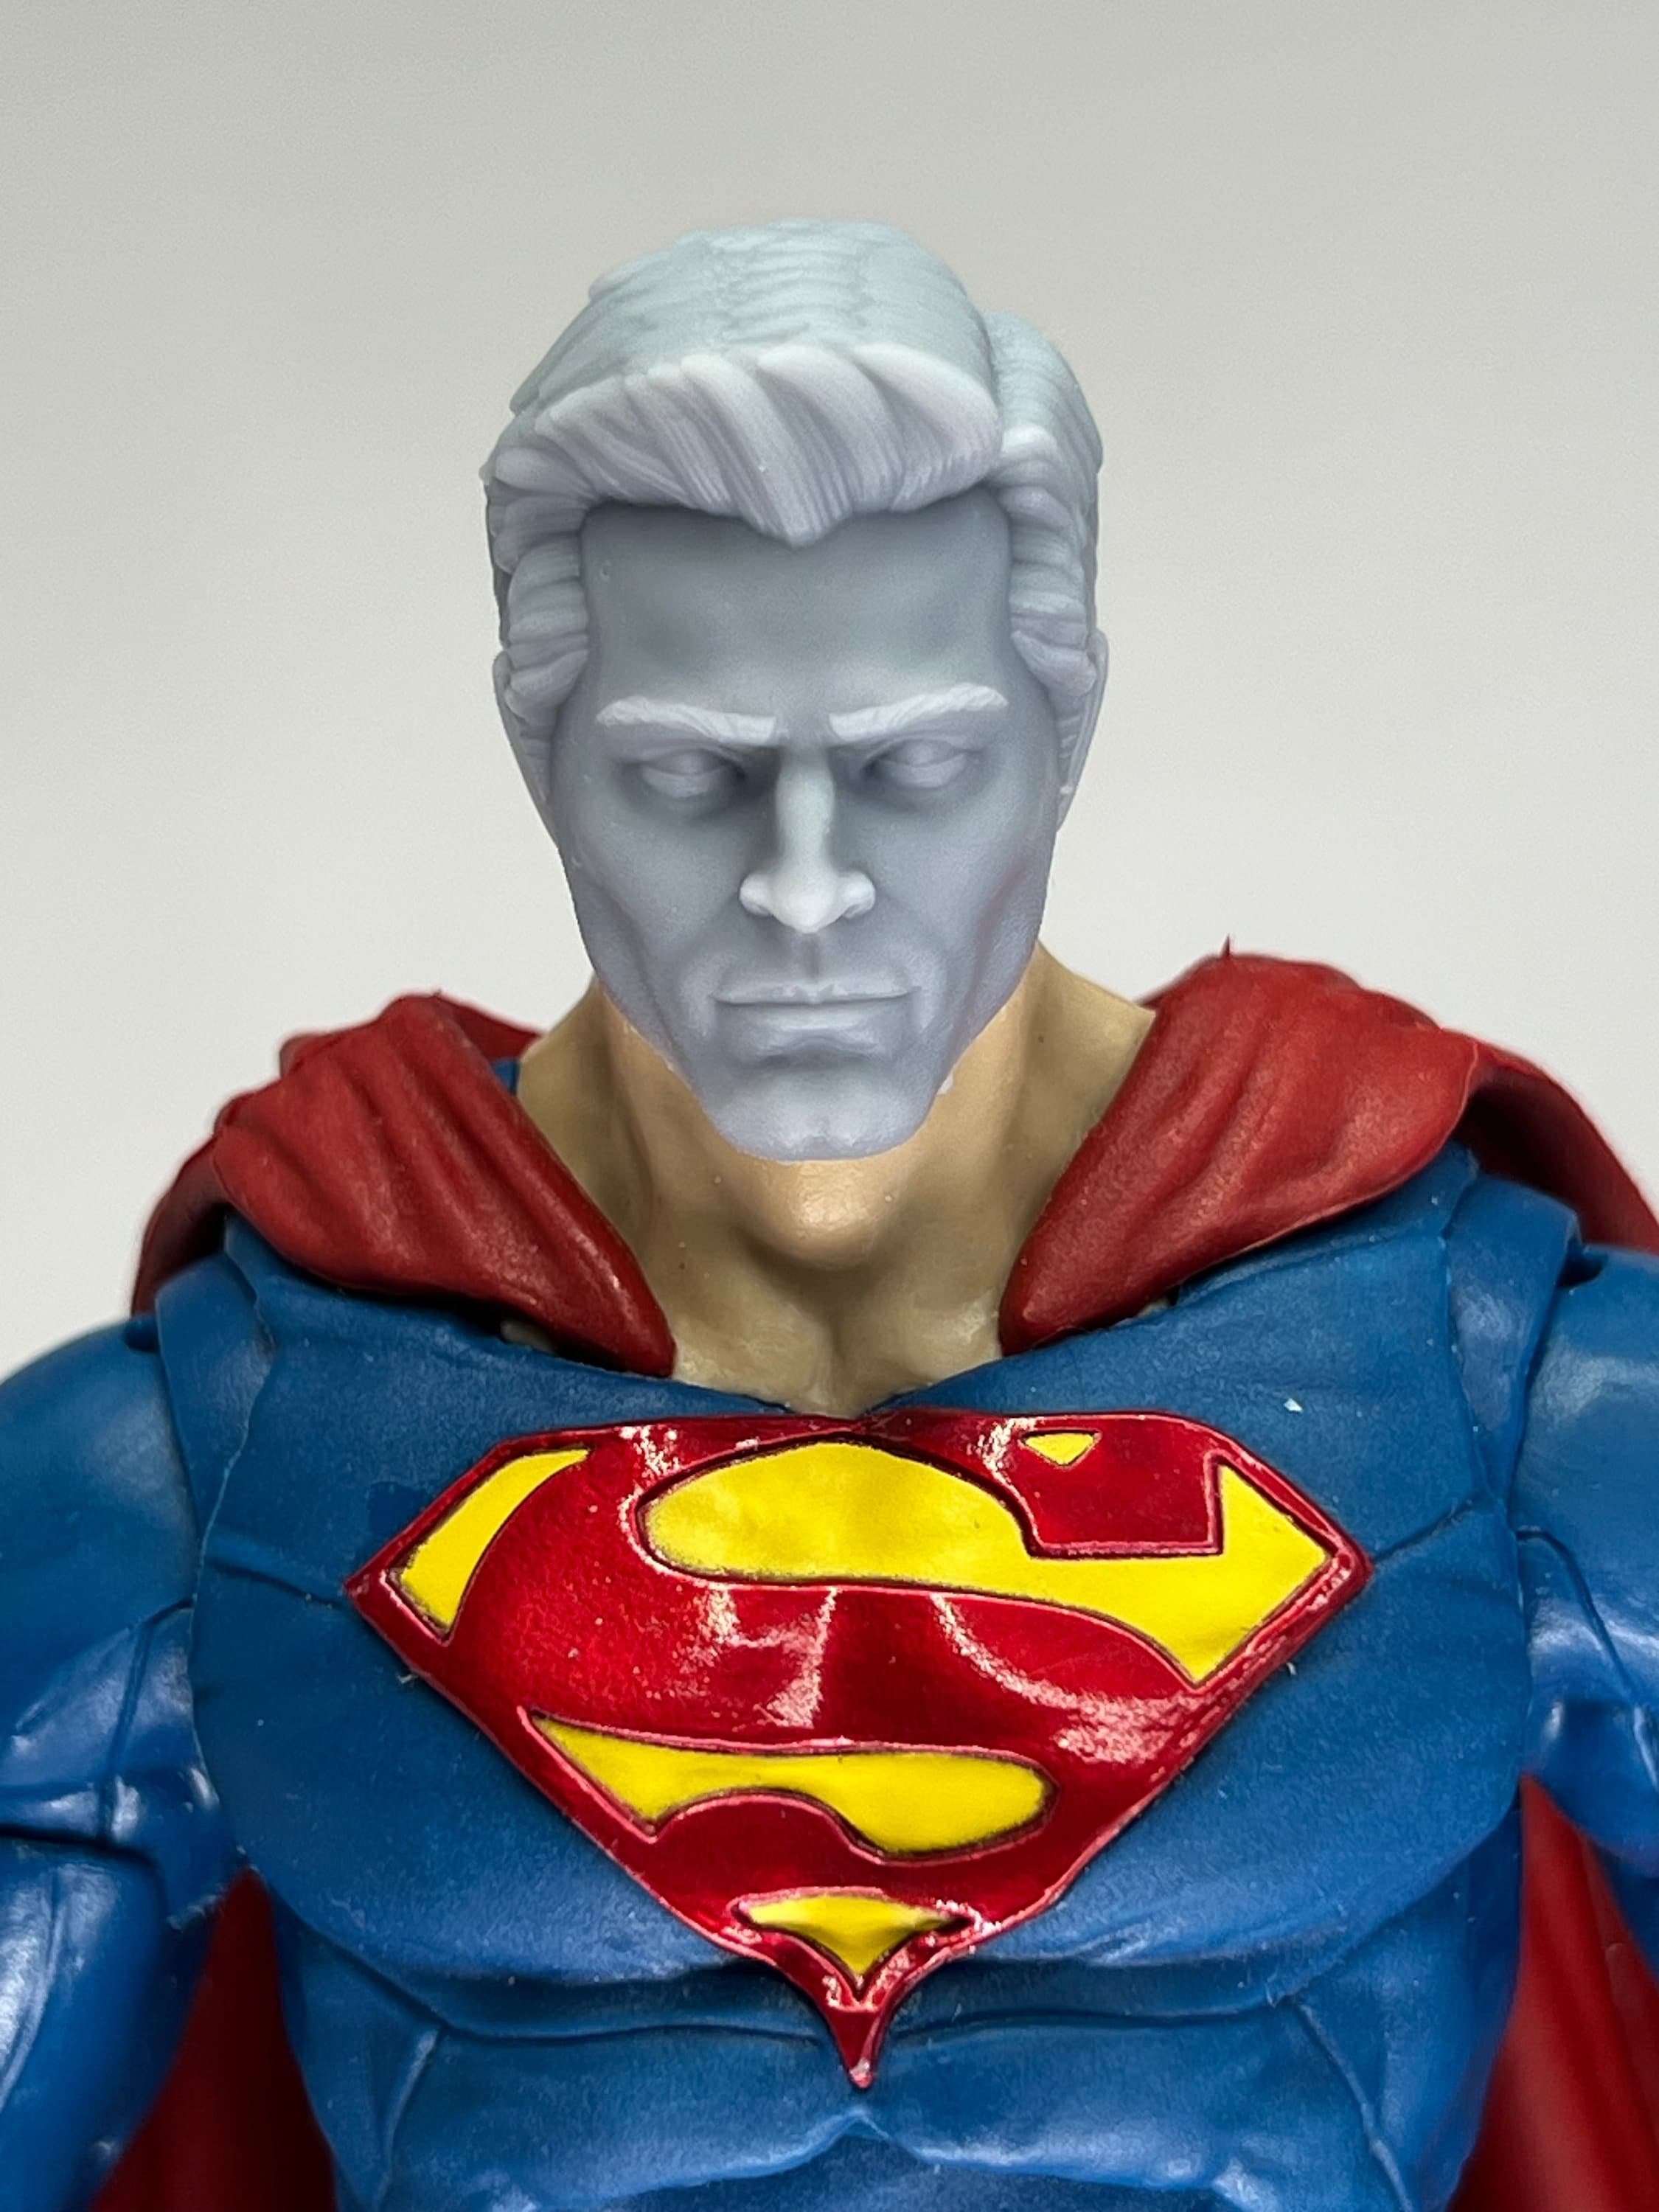 HENRY CAVILL - Sexy Superhero: Superman (Man of Steel) 8x10 Photo #2